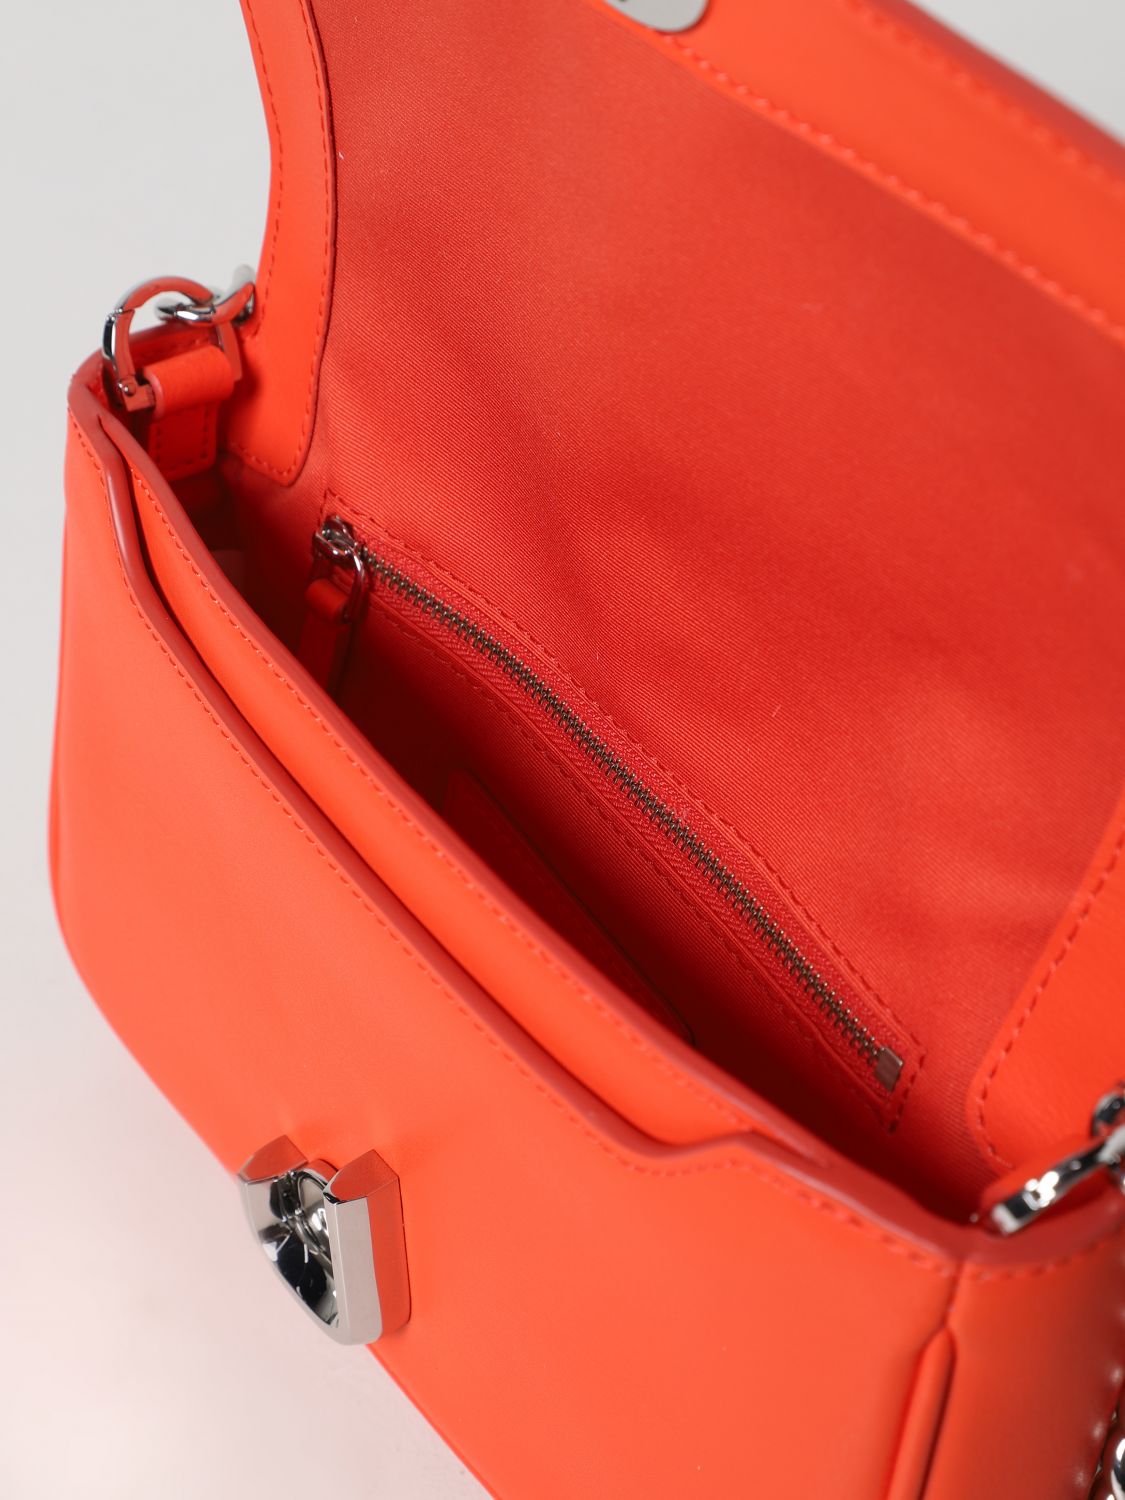 MARC JACOBS: mini bag for woman - Black  Marc Jacobs mini bag H956L01PF22  online at